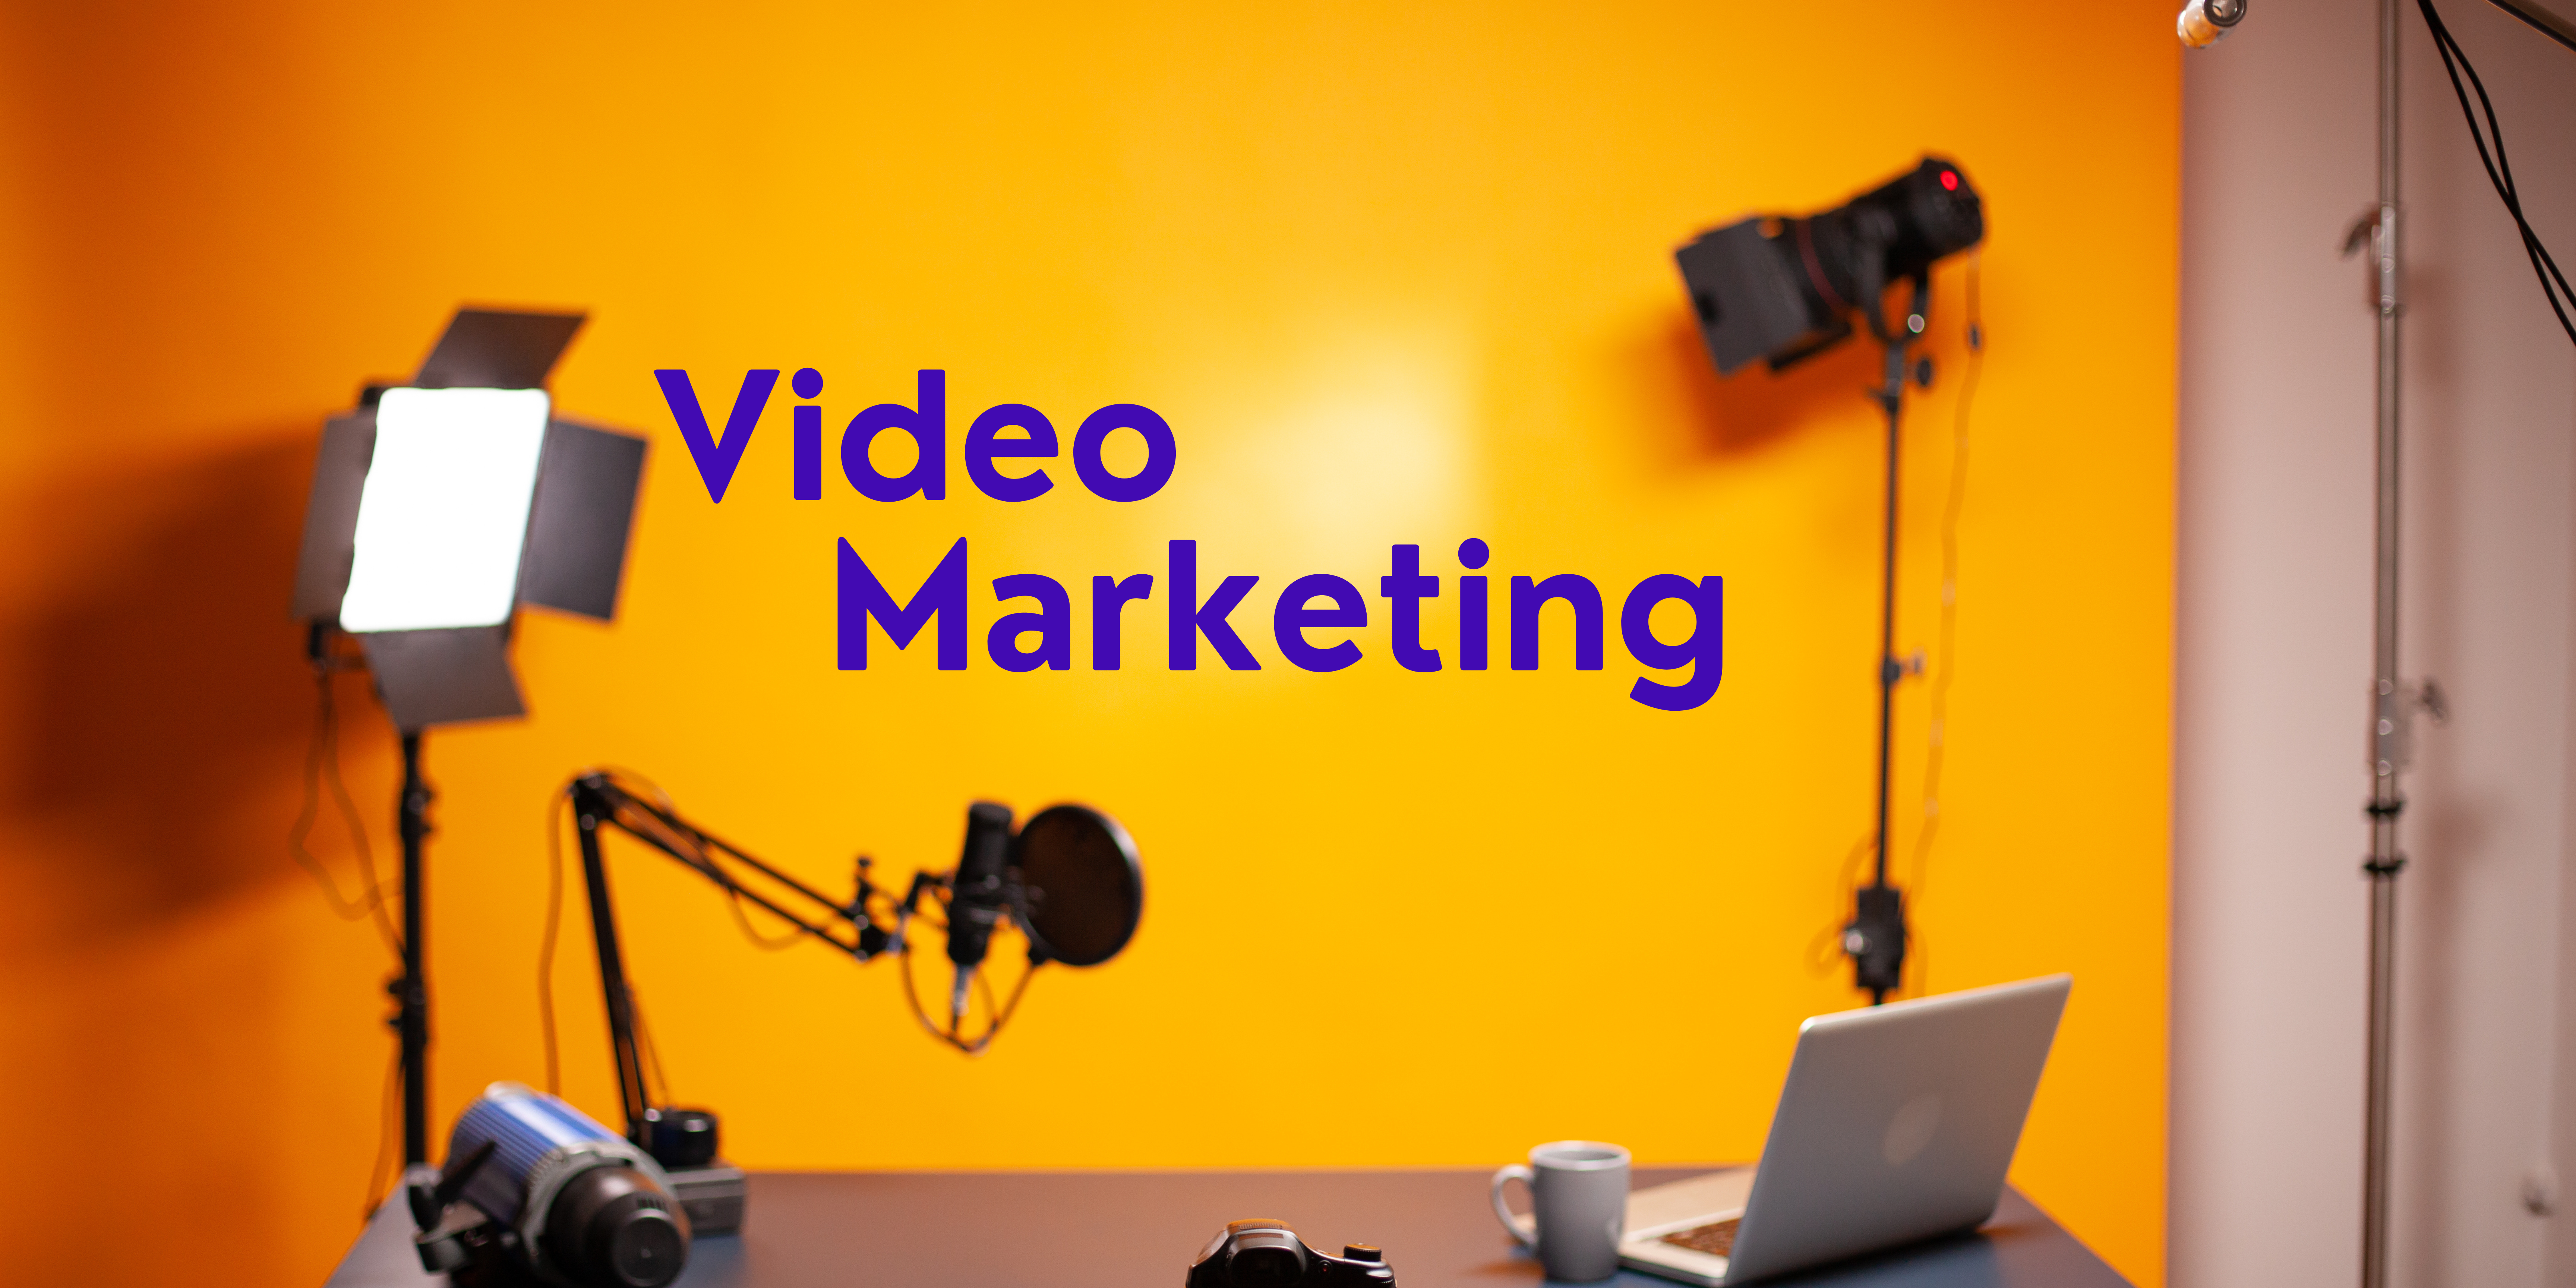 Video marketing in digital marketing